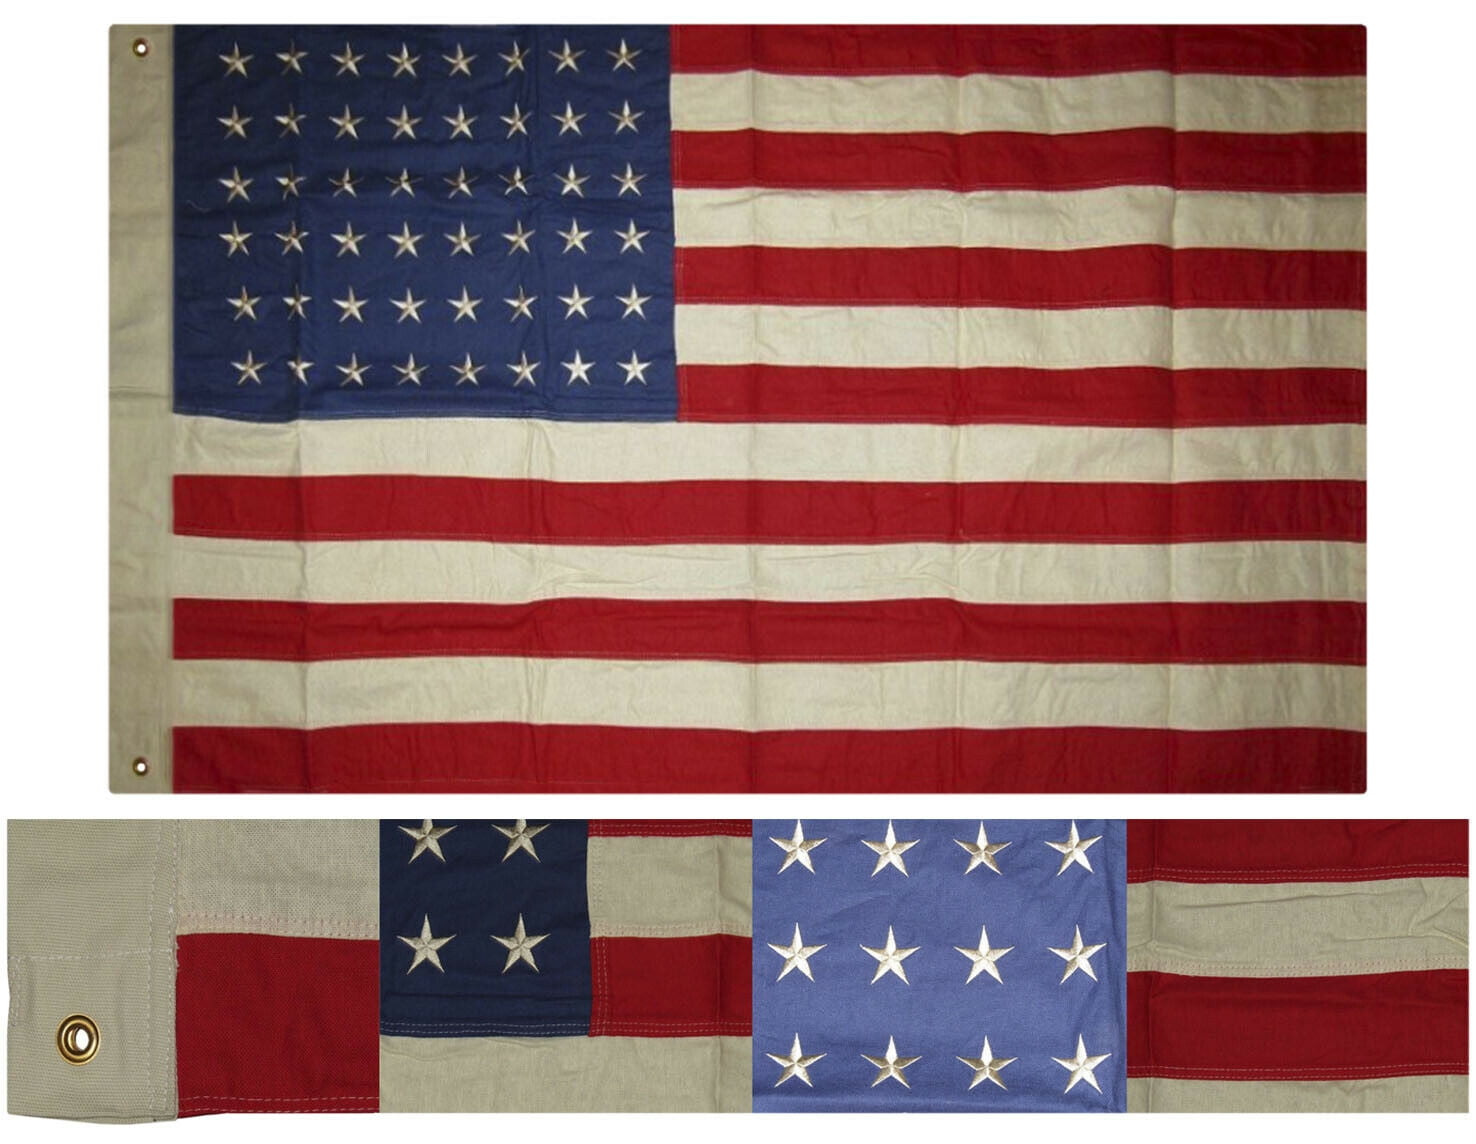 HEATH 25404 3 x 5 foot Polycotton American Flag w/ Printed Stars and Stripes NEW 